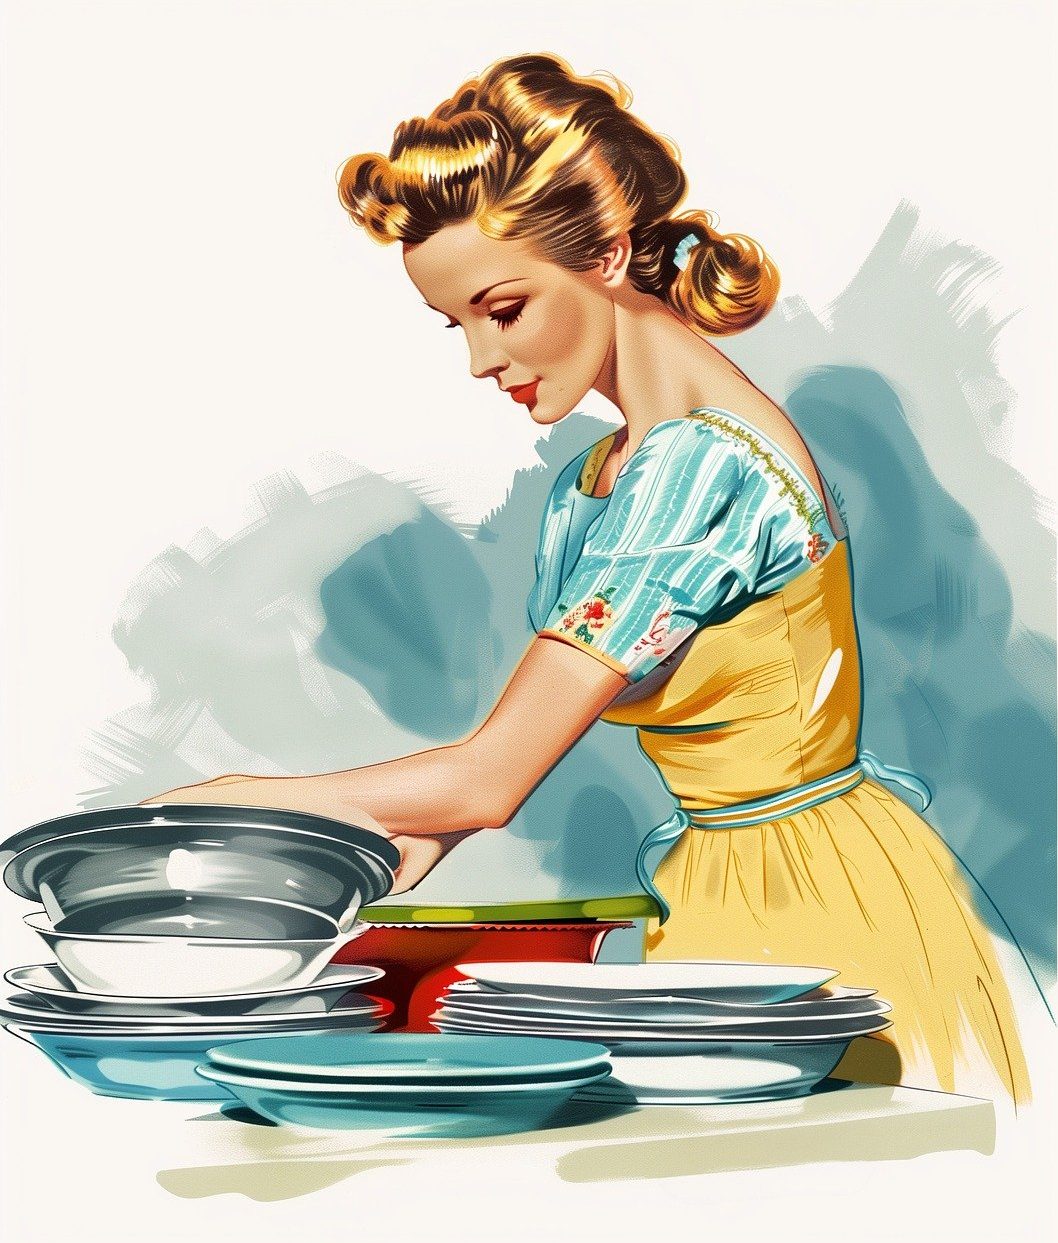 Lavar los platos